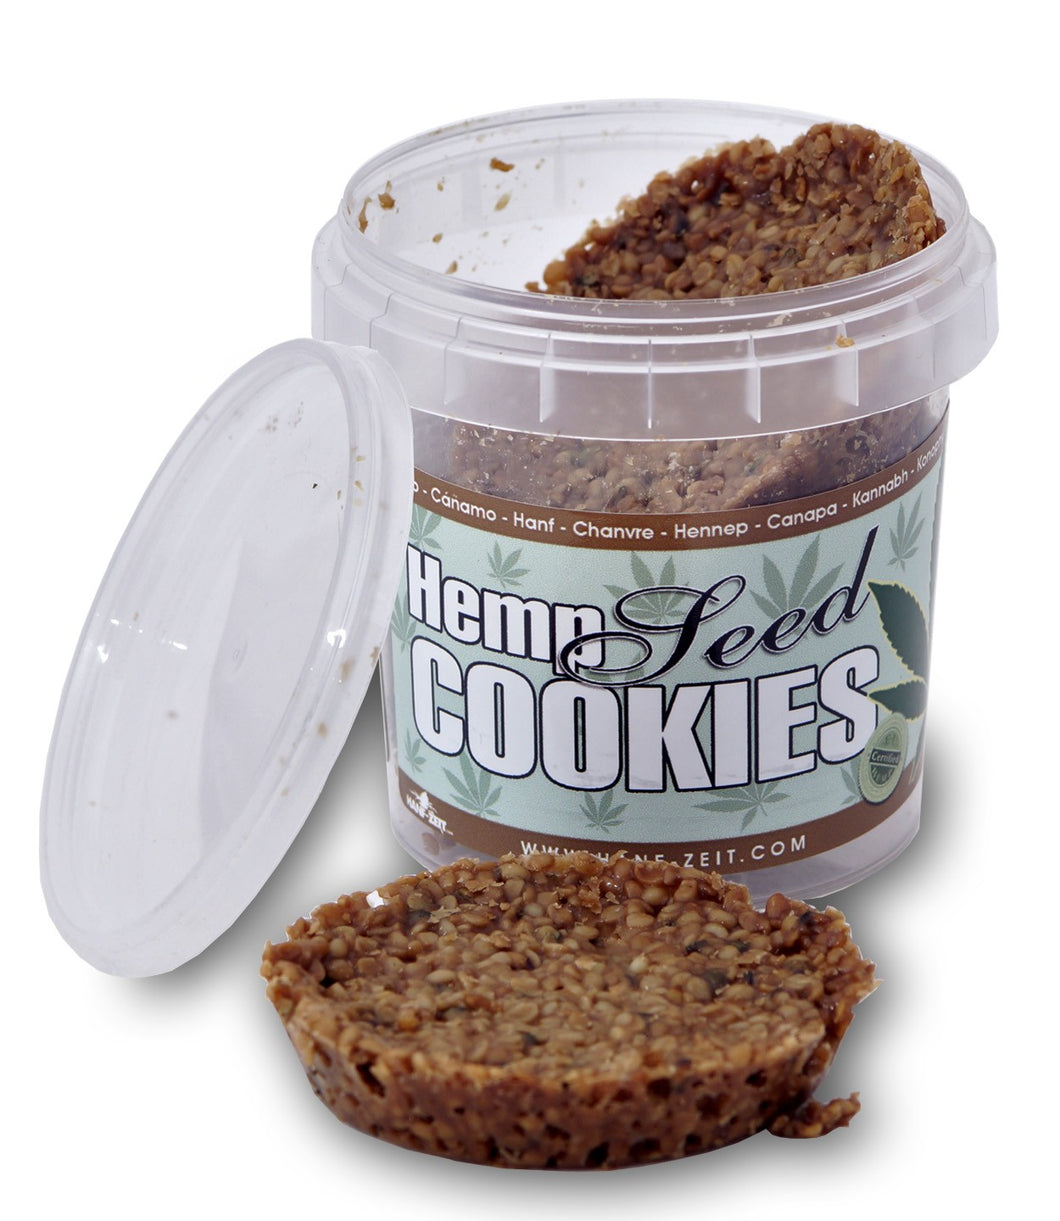 Hemp-Seed-Cookies, Kekse aus Hanfsamen